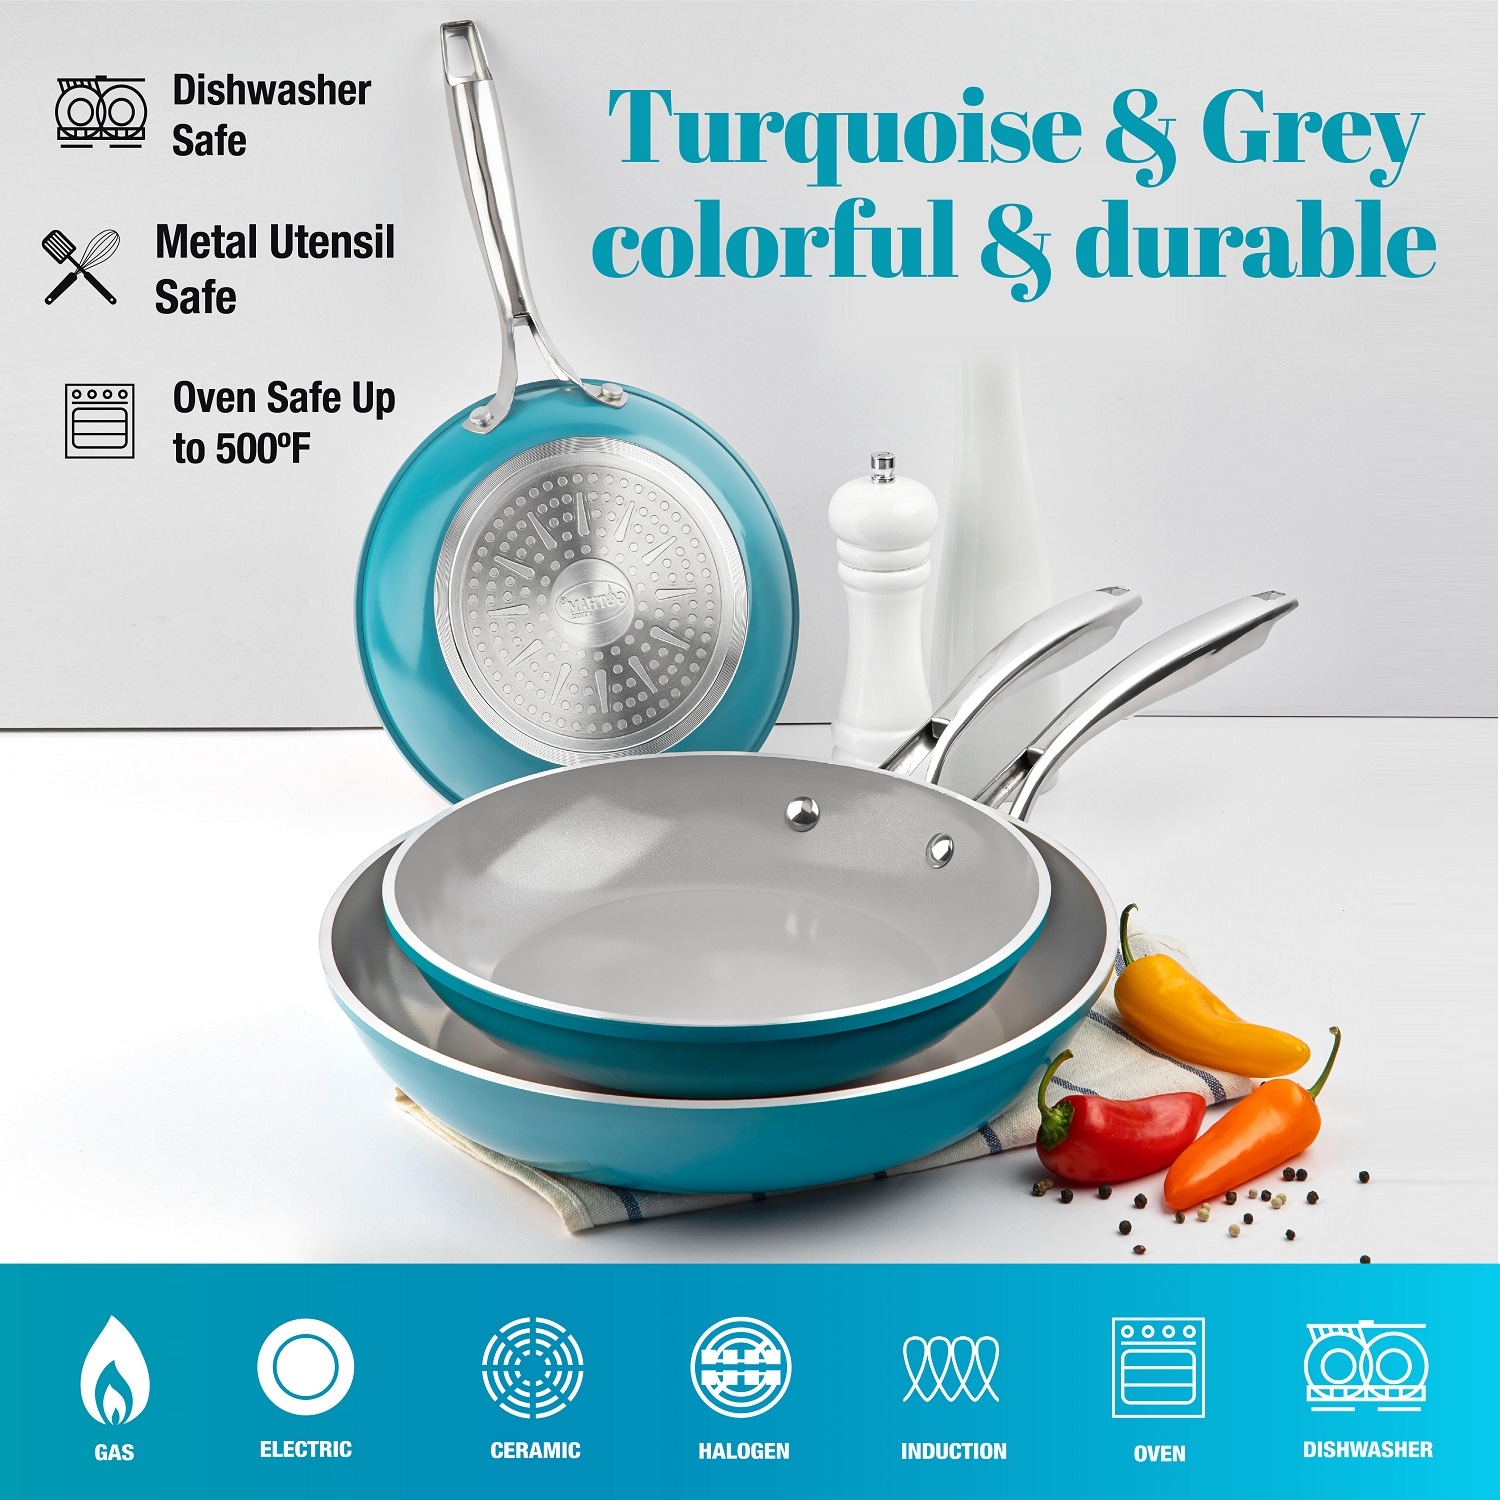 Gotham Steel Aqua Blue 12 Piece Nonstick Ceramic Cookware Set, Oven &  Dishwasher Safe & Reviews